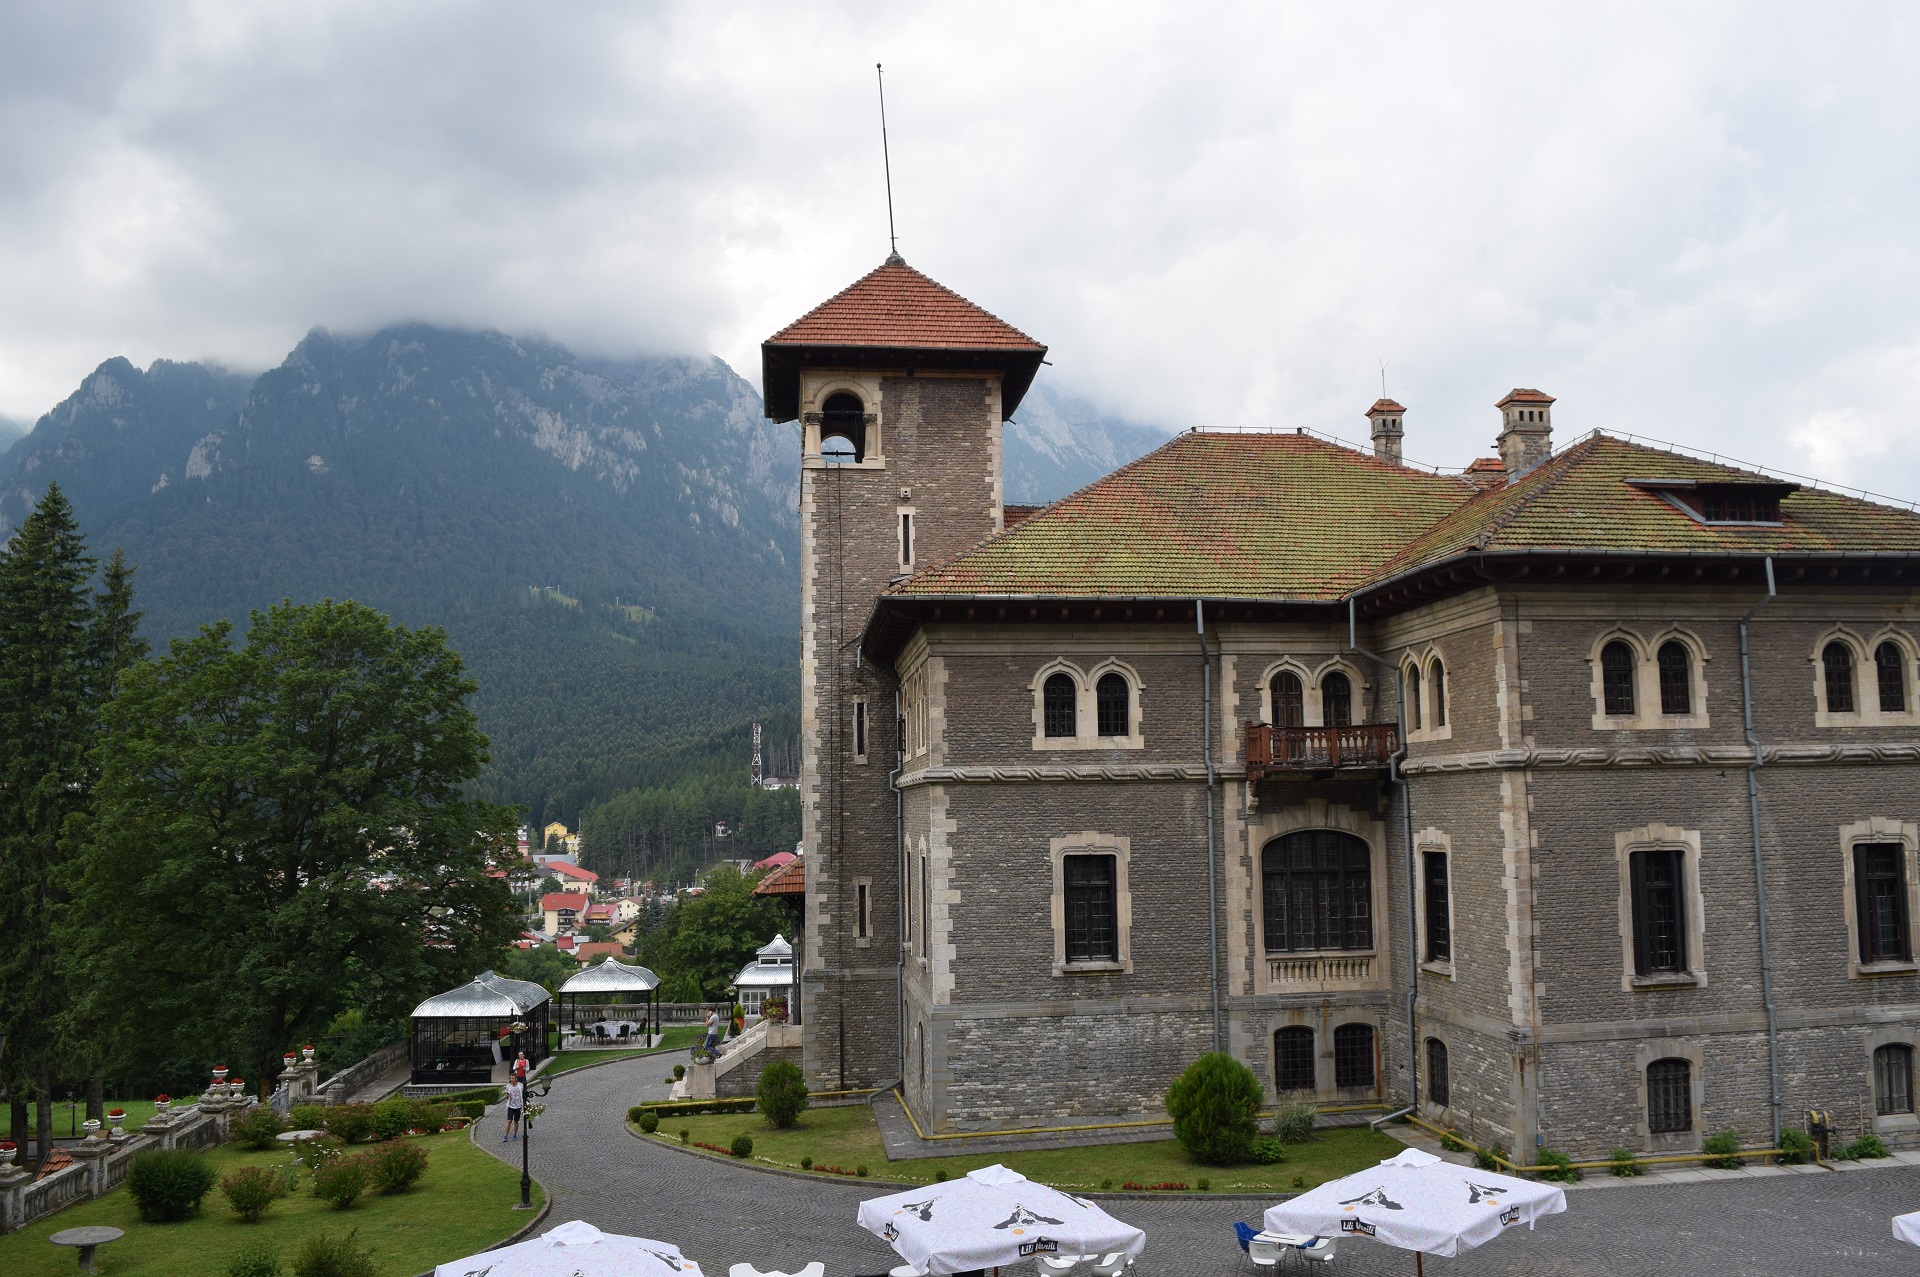 Cantacuzino castle